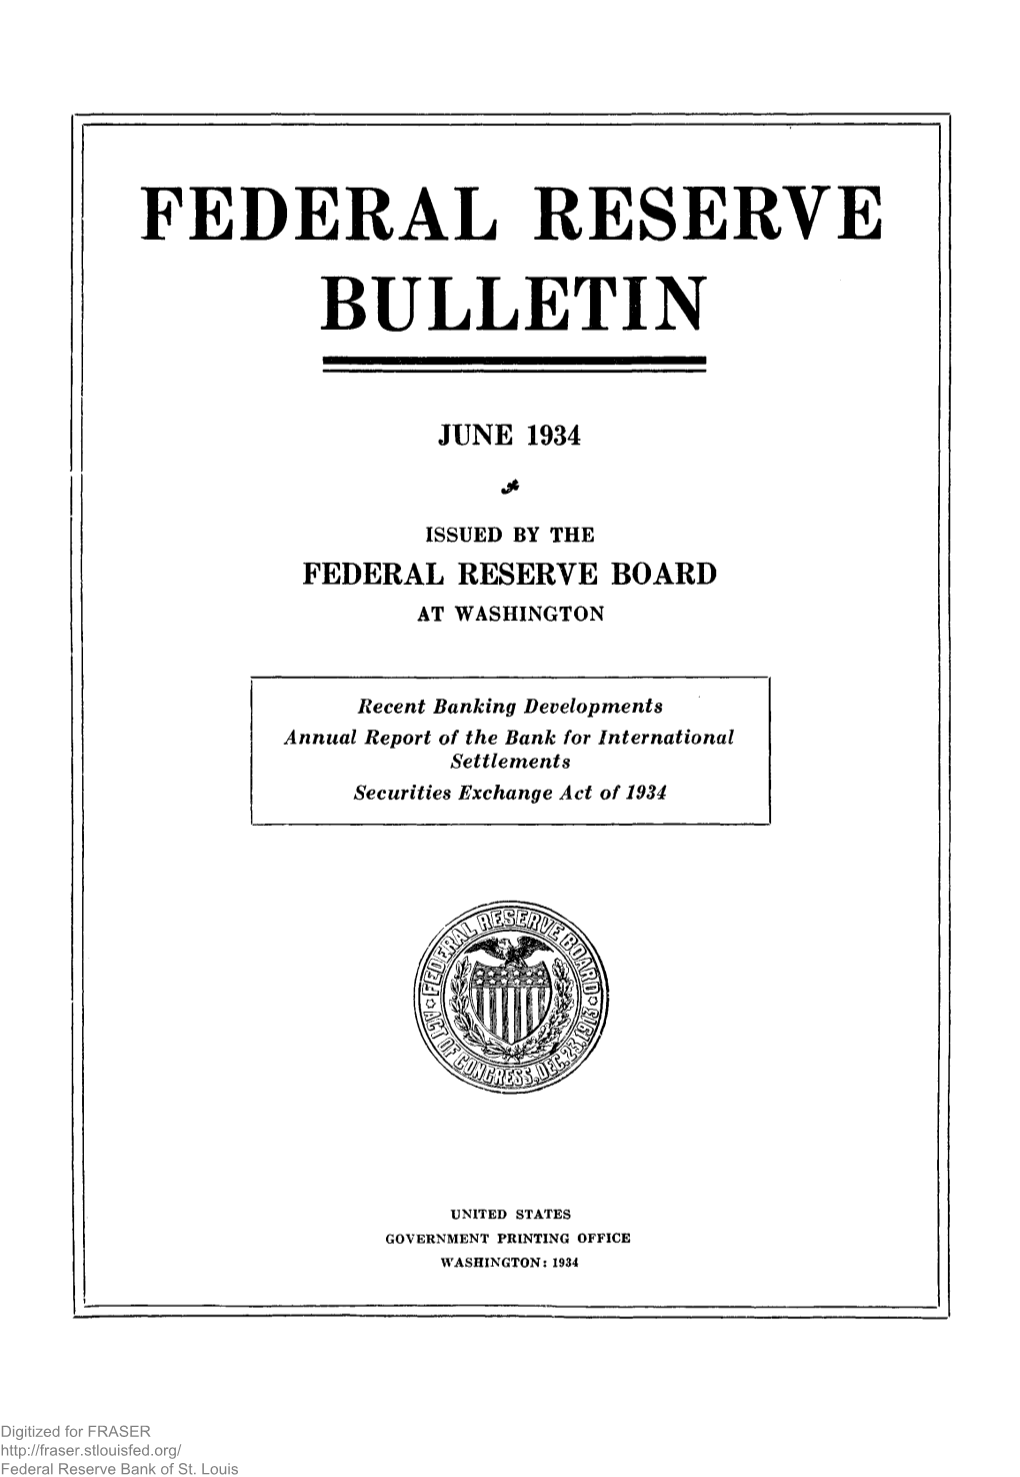 Federal Reserve Bulletin June 1934